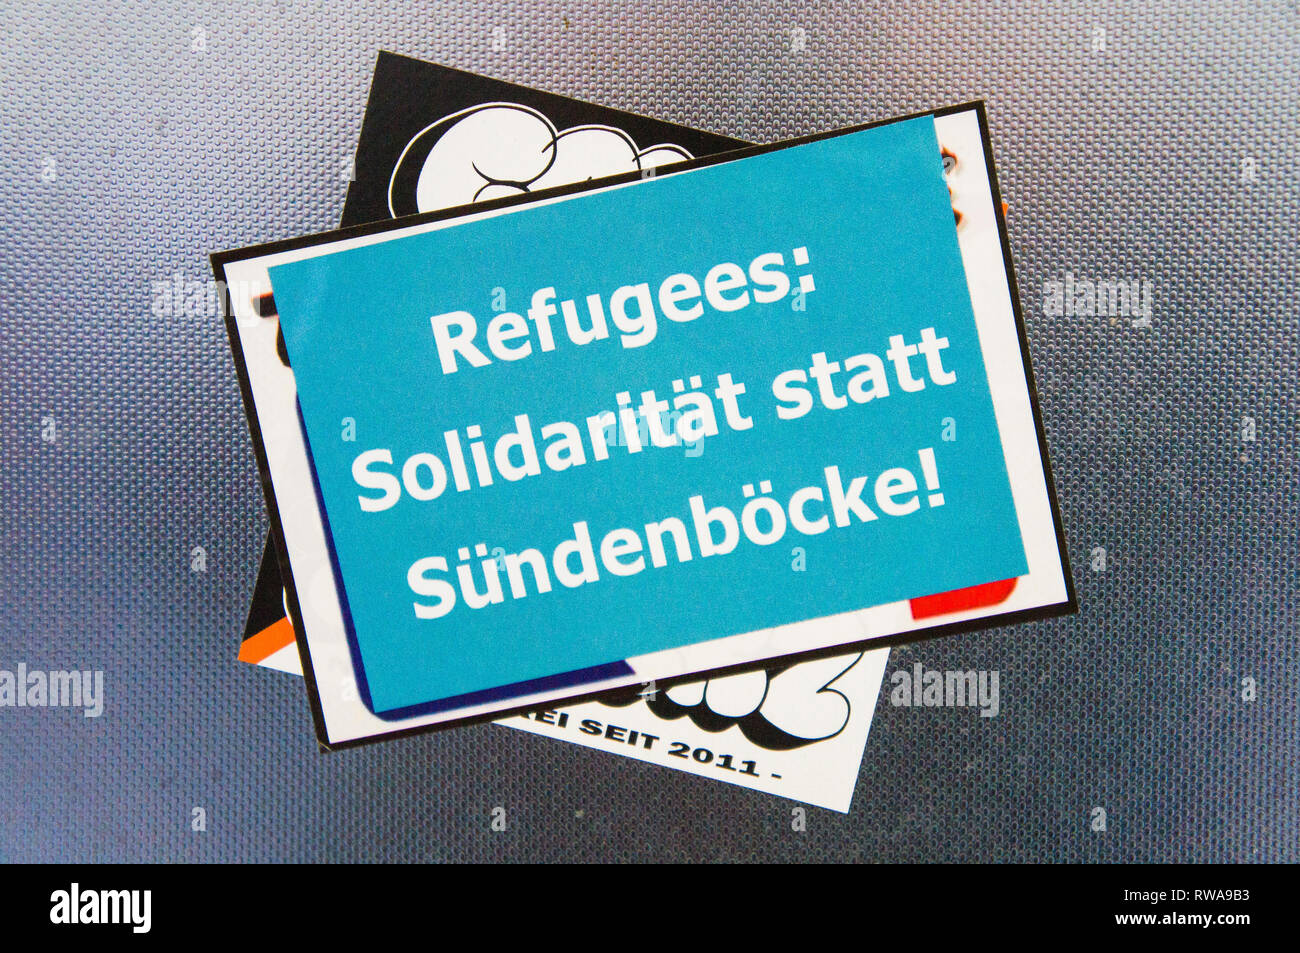 The Refugees: Solidaritat statt Sundenbocke!,  sticker in Vienna, Austria, on January 6, 2019.  (CTK Photo/Libor Sojka) Stock Photo